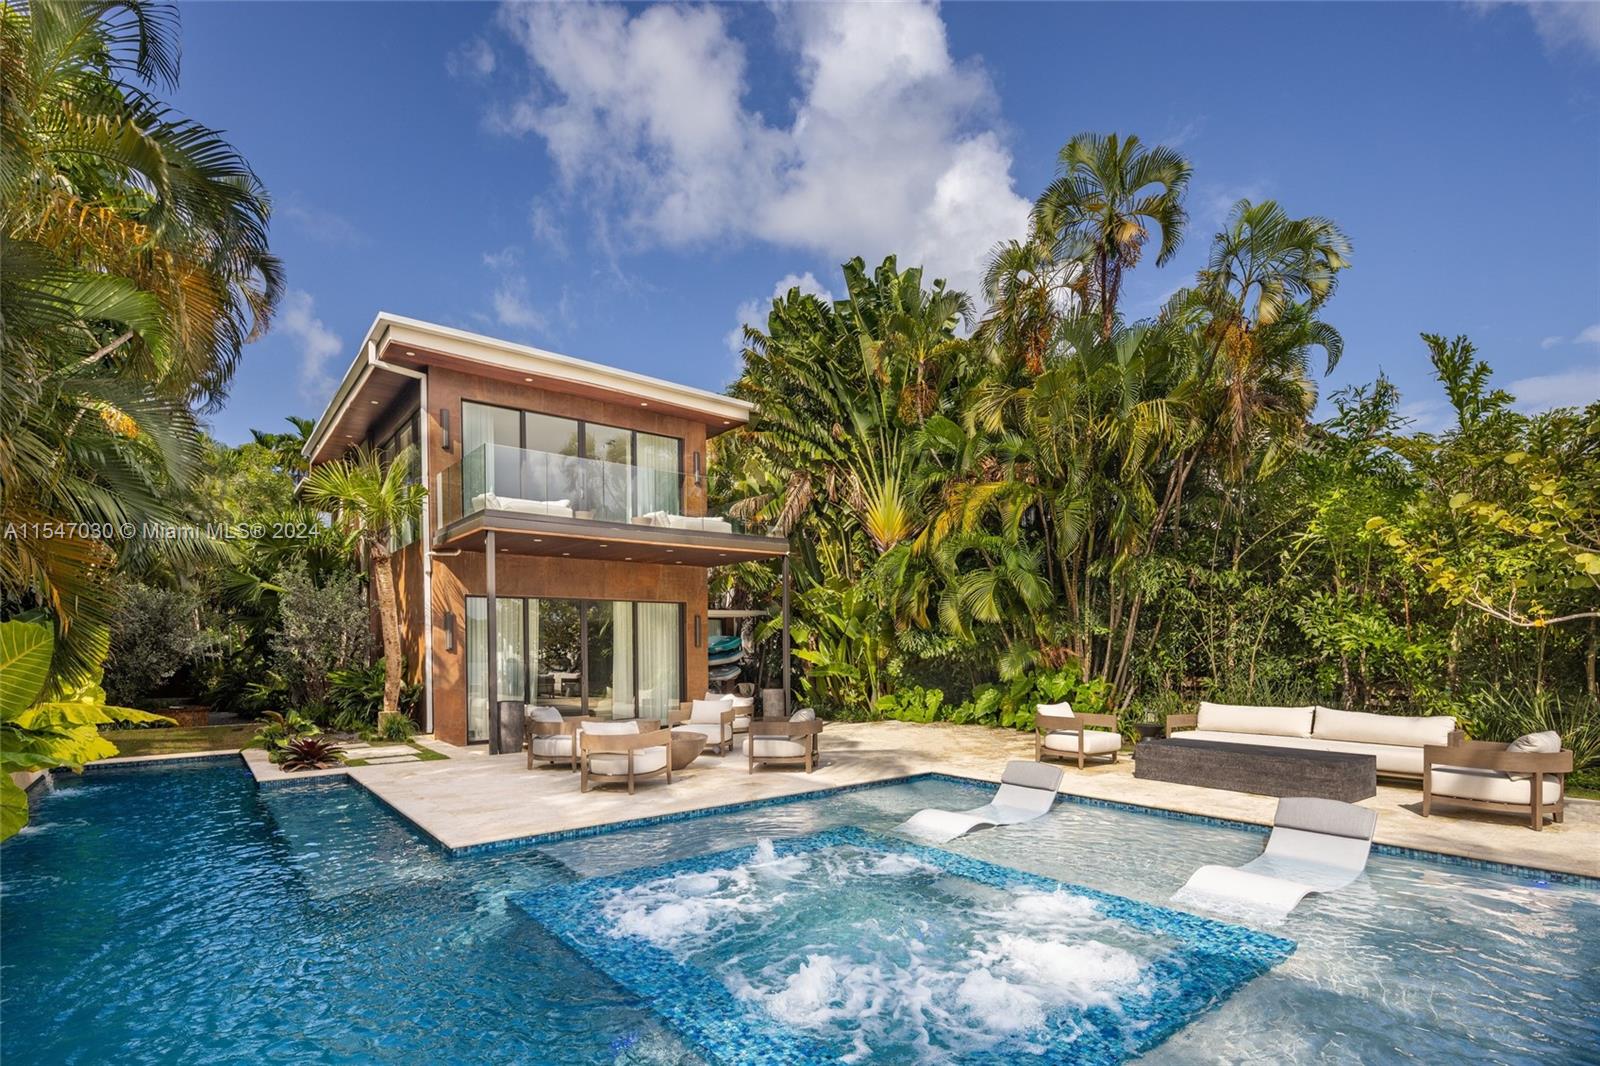 Rental Property at 250 S Hibiscus Dr, Miami Beach, Miami-Dade County, Florida - Bedrooms: 4 
Bathrooms: 4  - $105,000 MO.